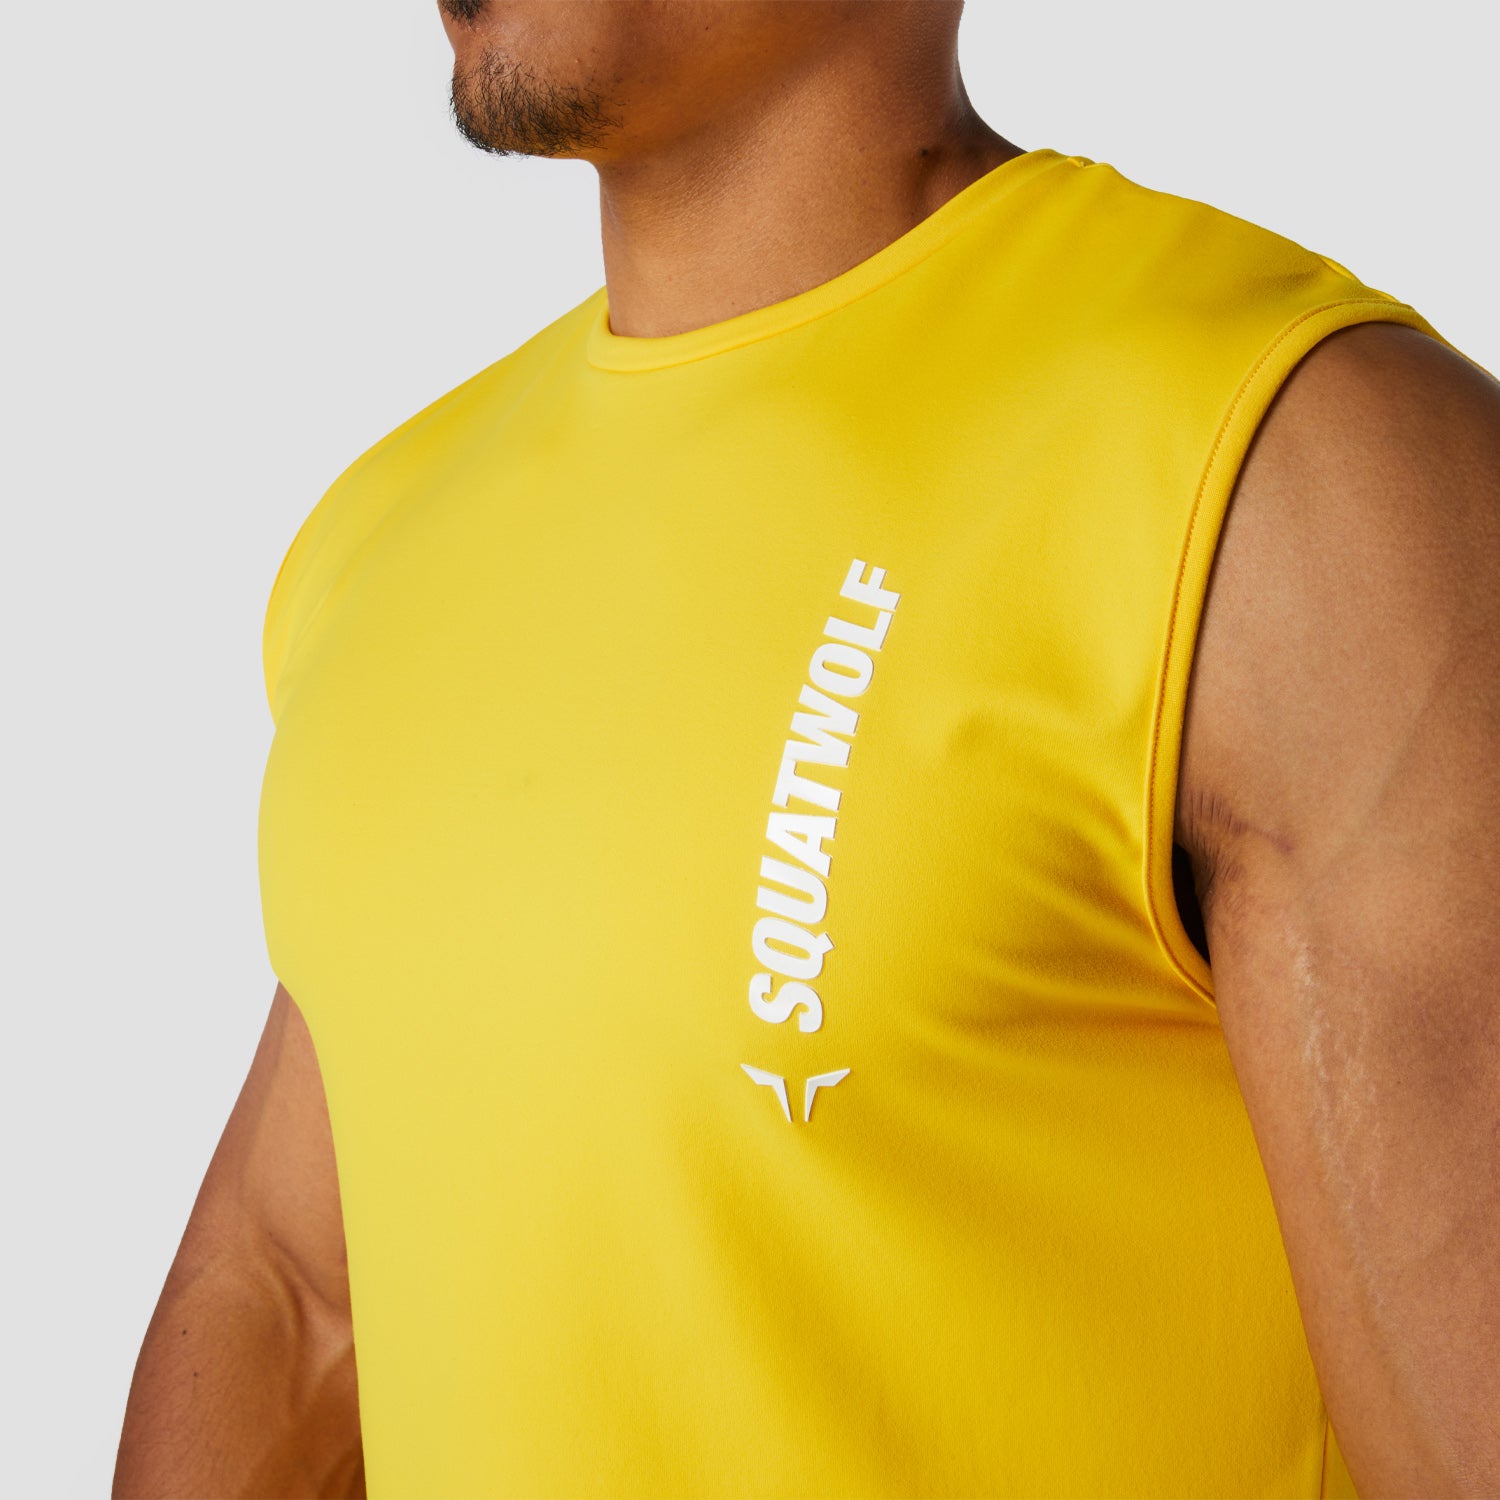 squatwolf-stringer-vests-for-men-warrior-tank-yellow-gym-wear